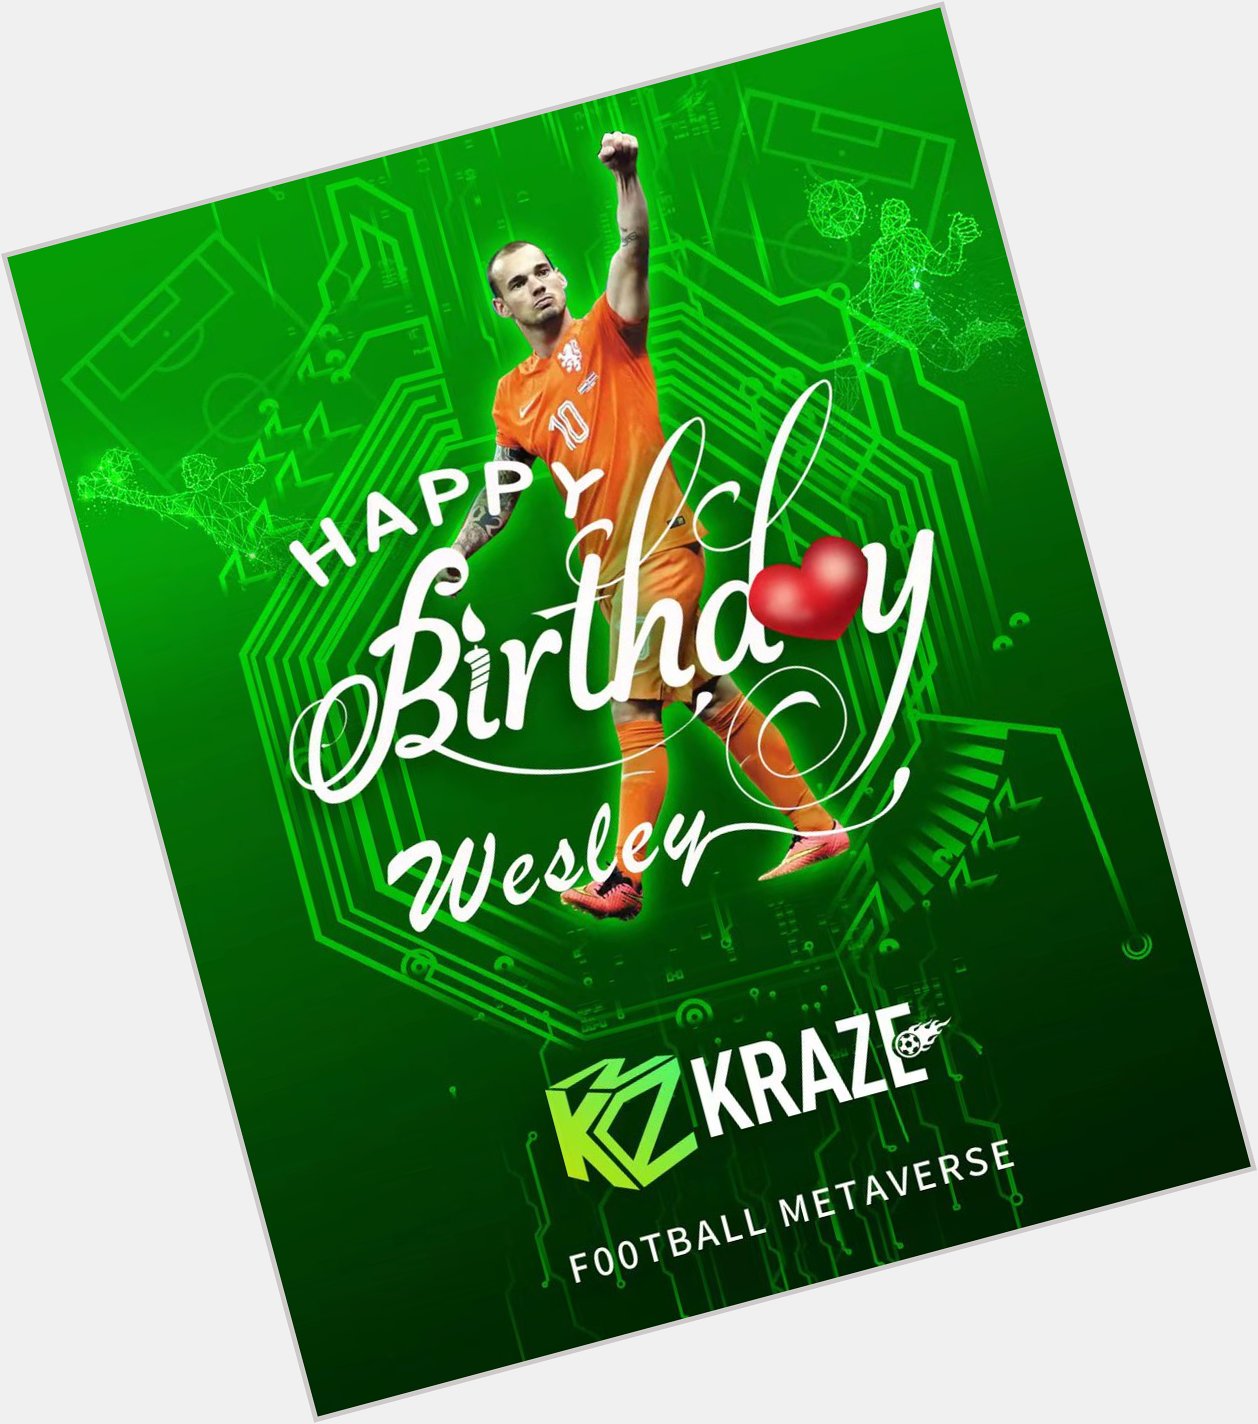 Happy birthday to the  co-founder of Kraze - Wesley Sneijder! 